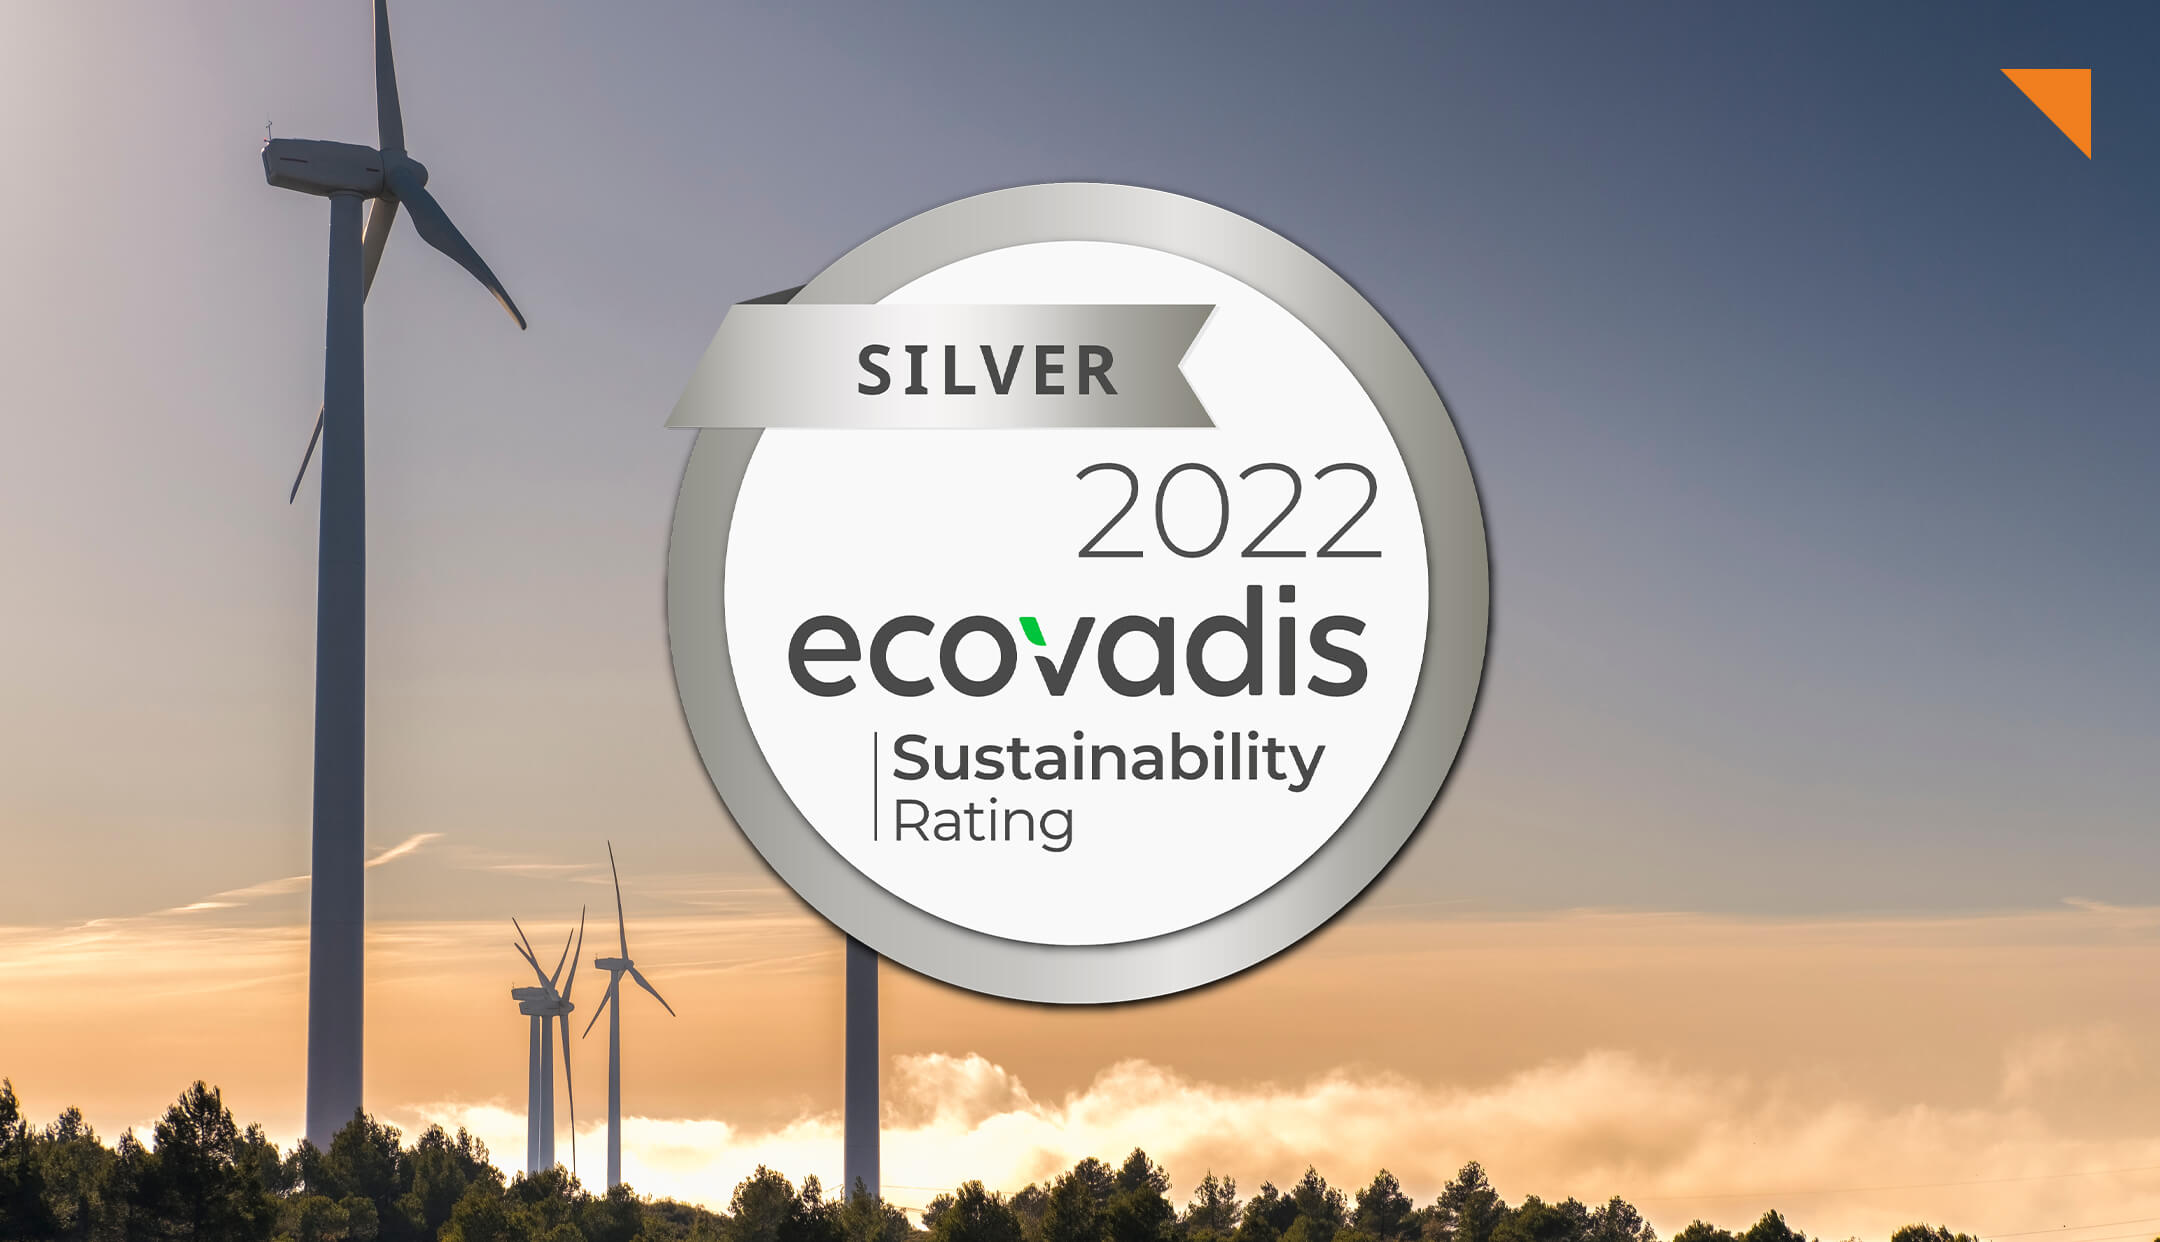 Corporate Social Responsibility - usd mit EcoVadis Silbermedaille ausgezeichnet